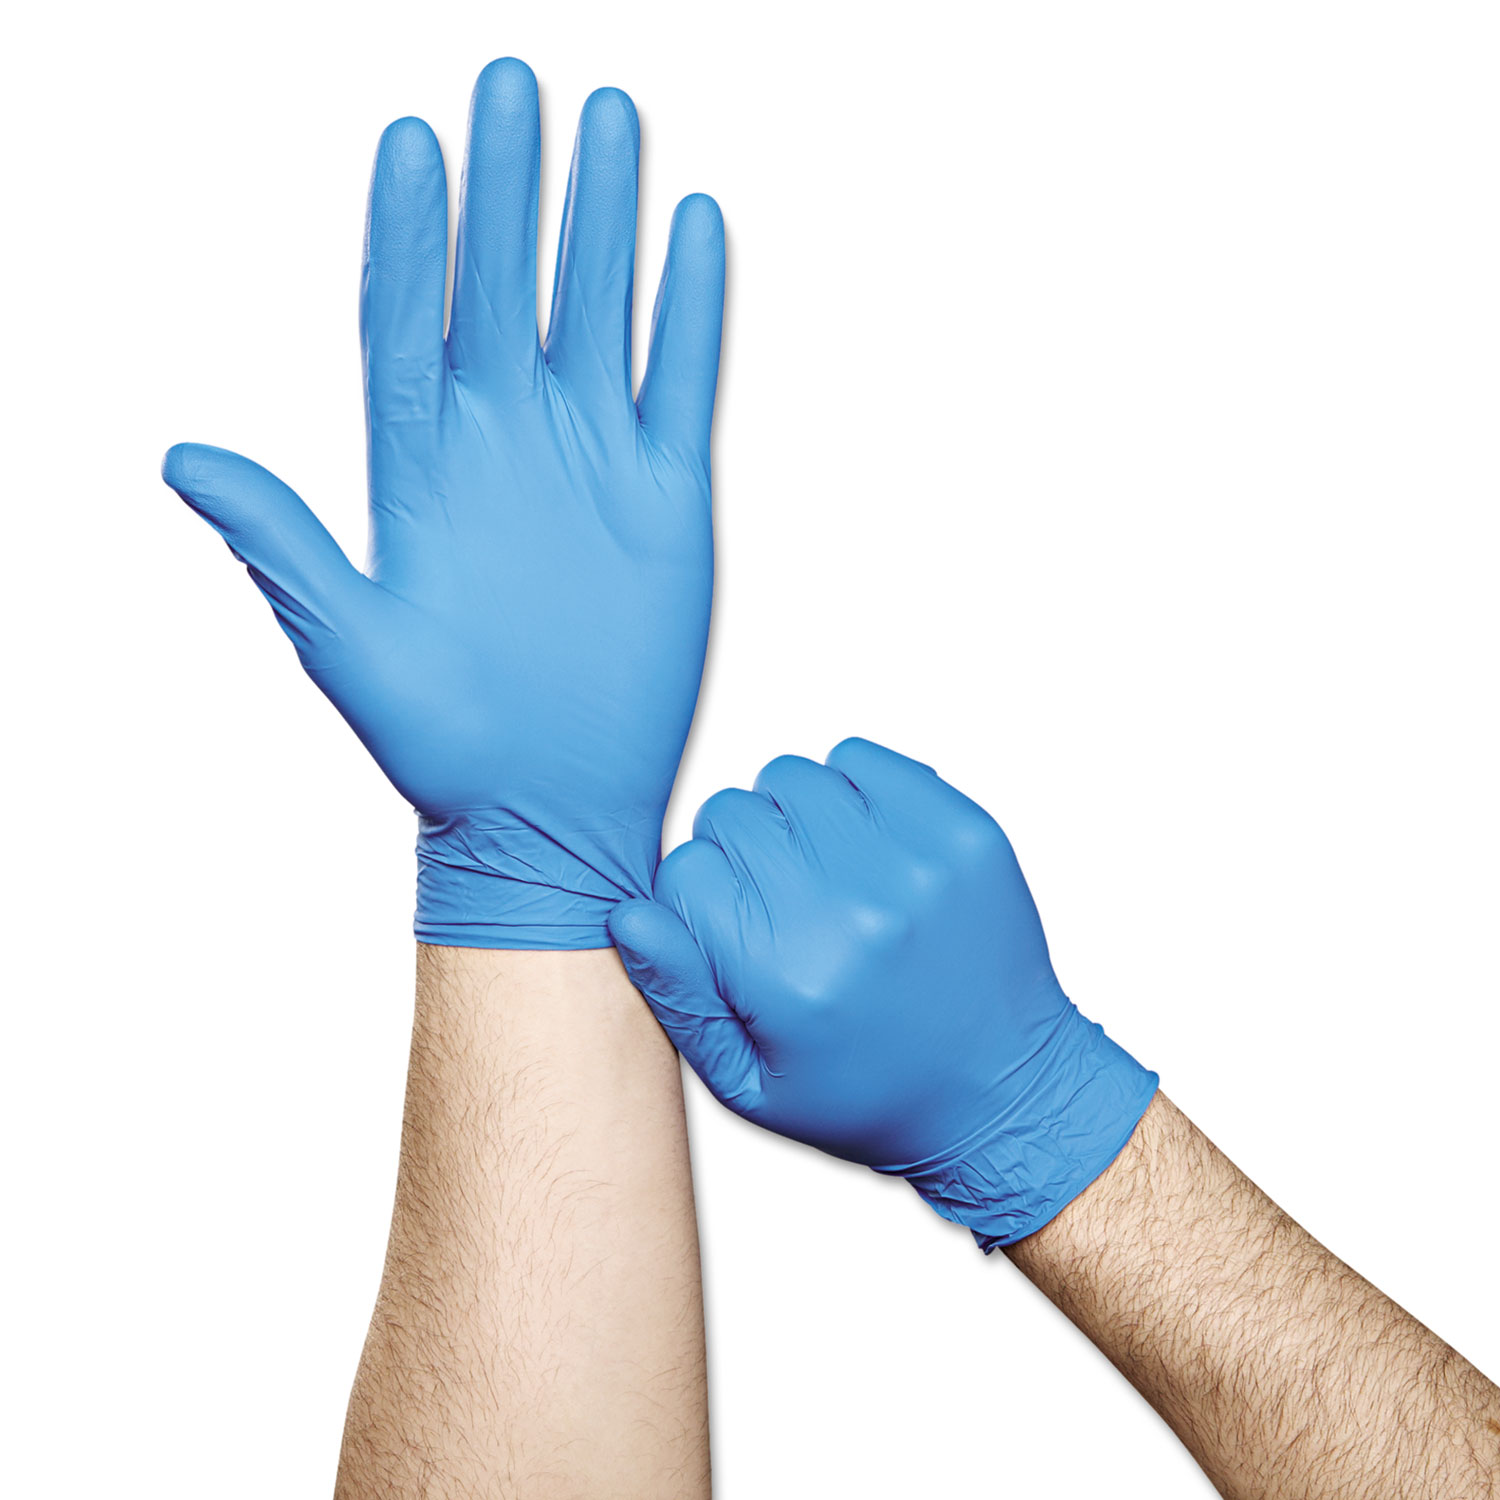 Перчатки душит. Перчатки Ansell нитрил. Nitrile Gloves перчатки. Перчатки connect Blue Nitrile. Нитриловые перчатки Анселл тач.